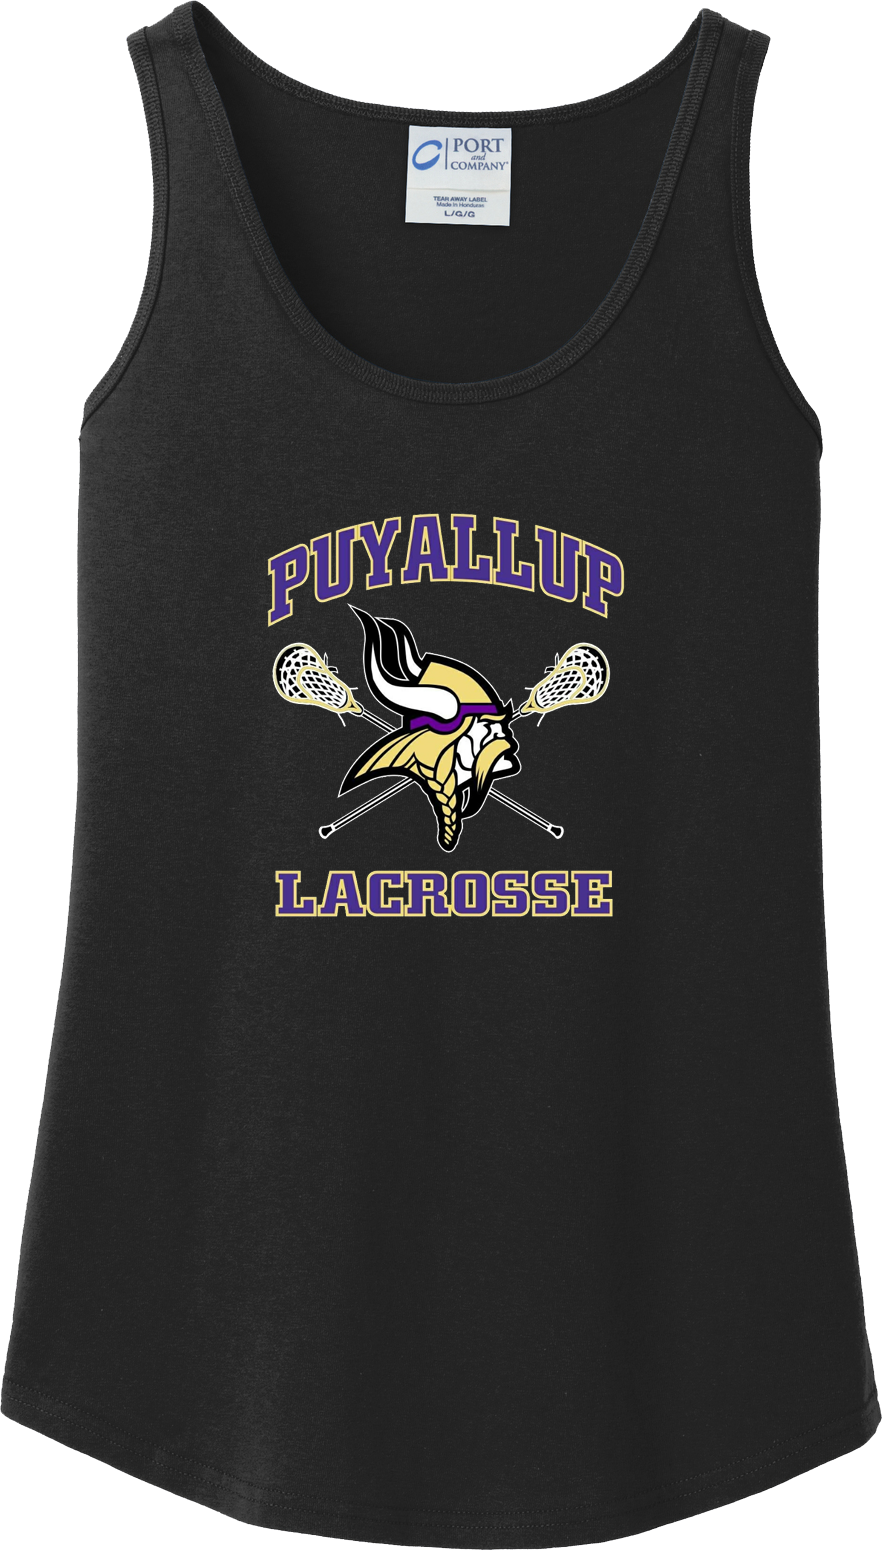 Puyallup Lacrosse Women's Black Tank Top